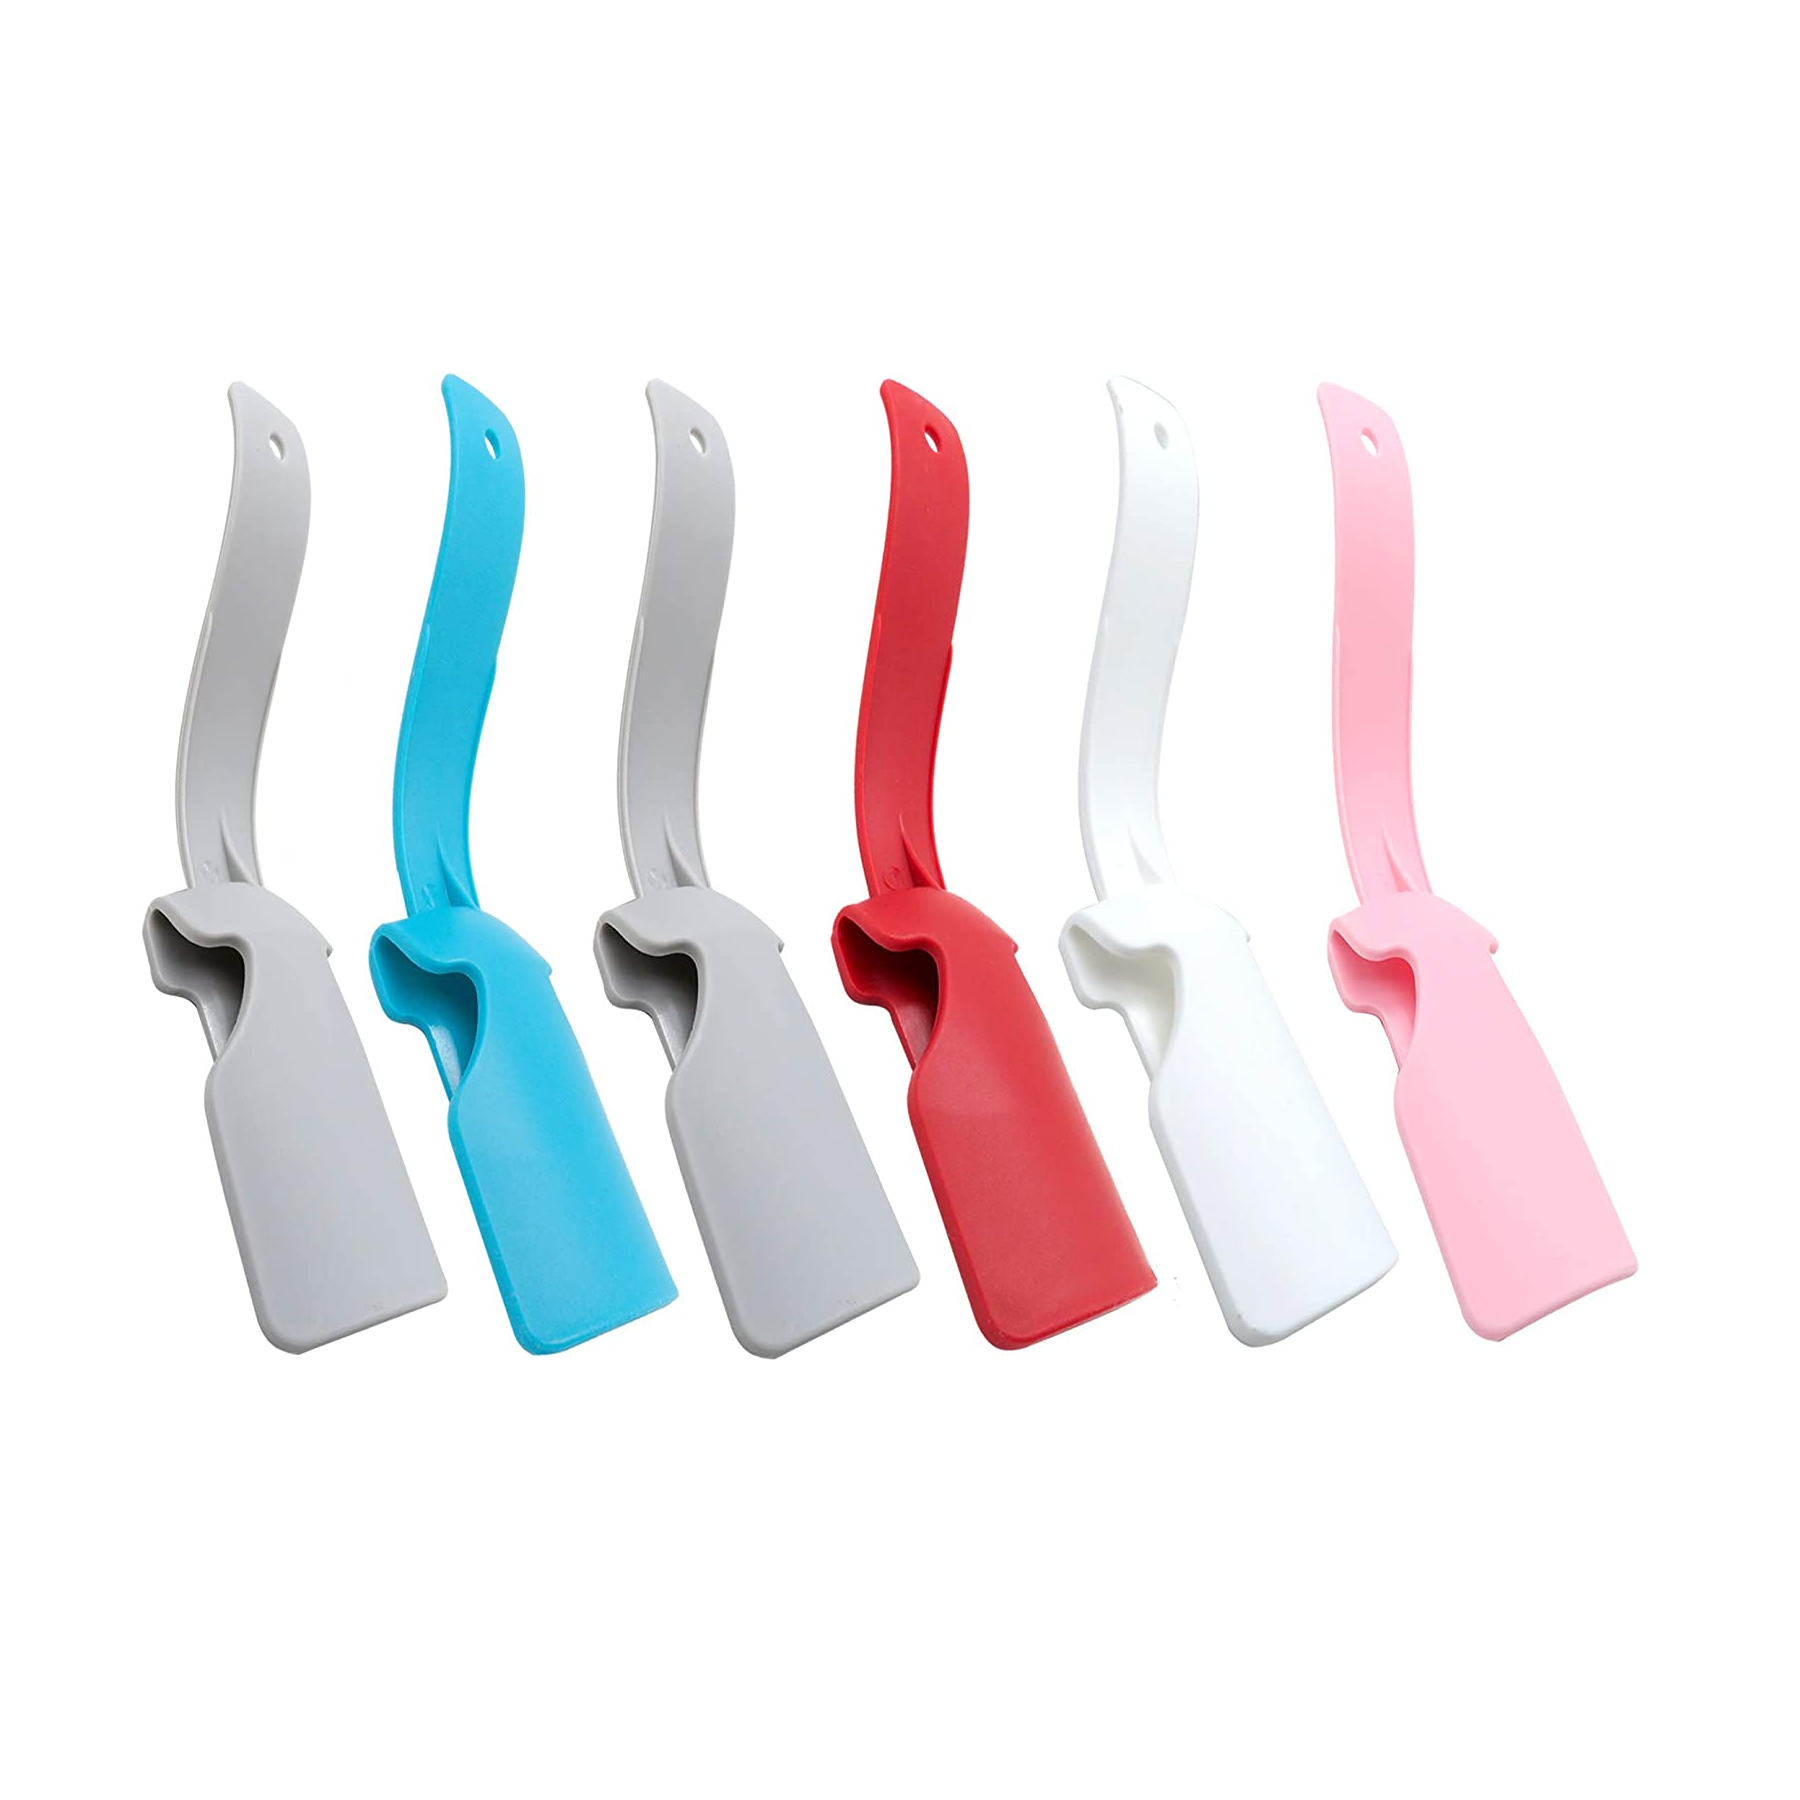 6 Pieces Lazy Shoe Helper-Portable Plastic Shoe Horn Lifting Helper Easy on/Off Sock Slider Travel Handled Wearing Tool for All Age Adult Kids Men Women Elderly Seniors Disabled- Multicolors